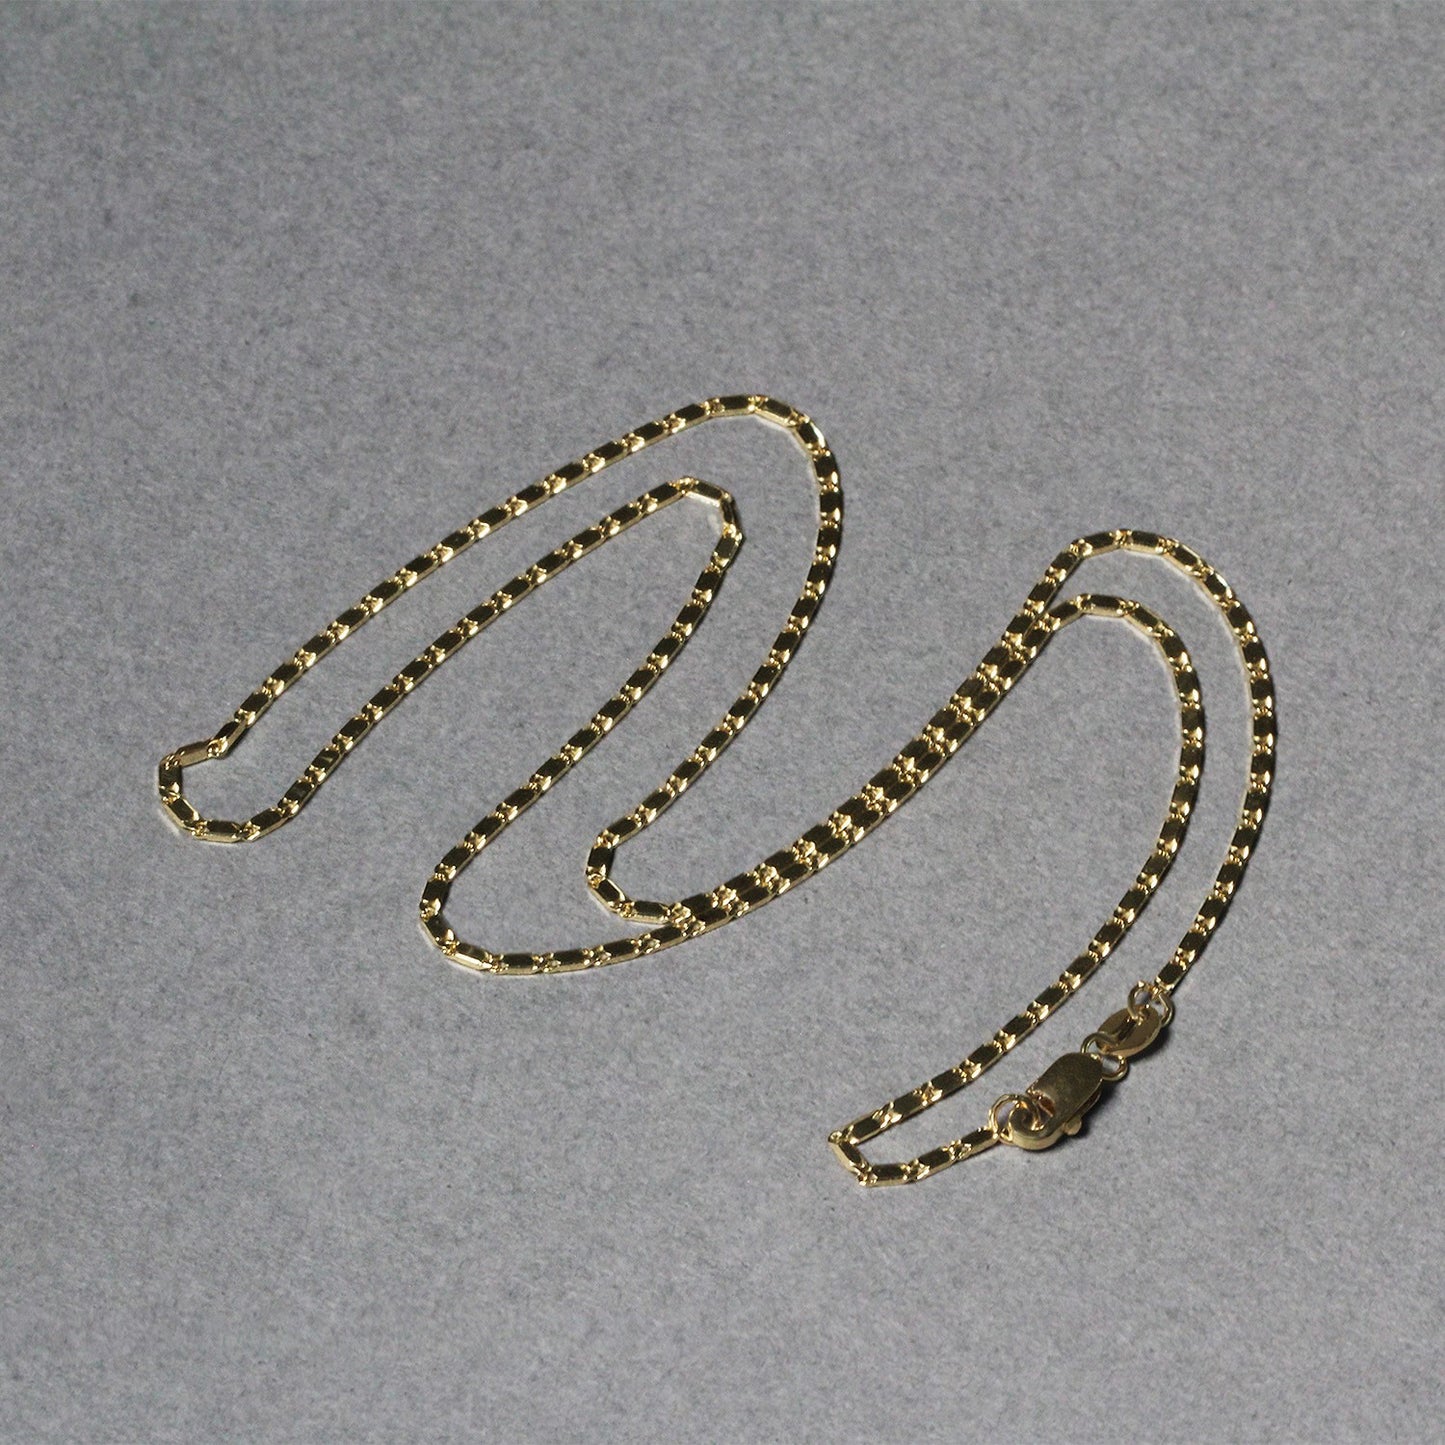 14k Yellow Gold Lumina Pendant Chain 1.0mm